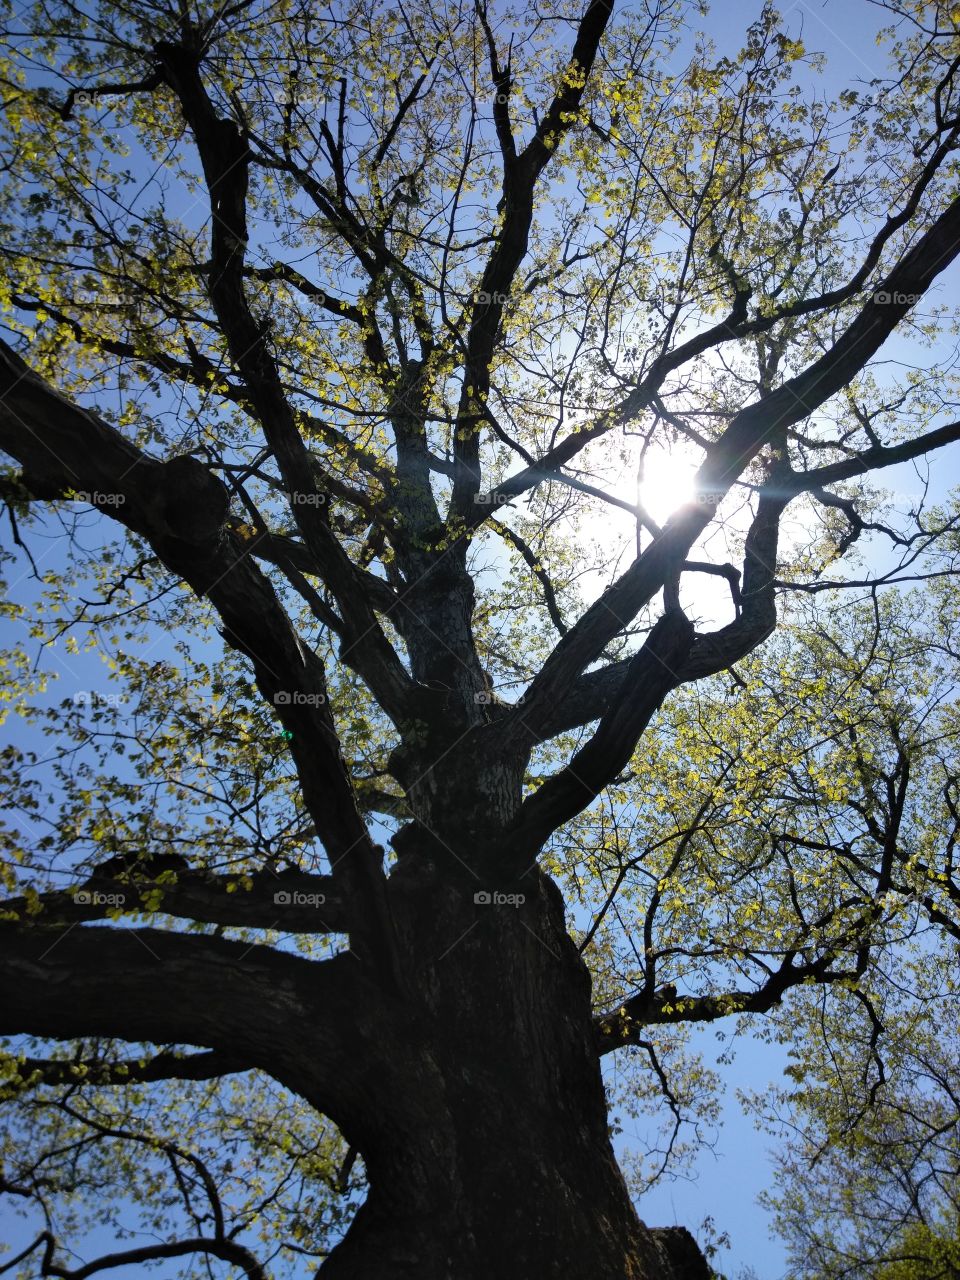 Sunshine glare on a very intrique old oak tree on a crisp spring morning.